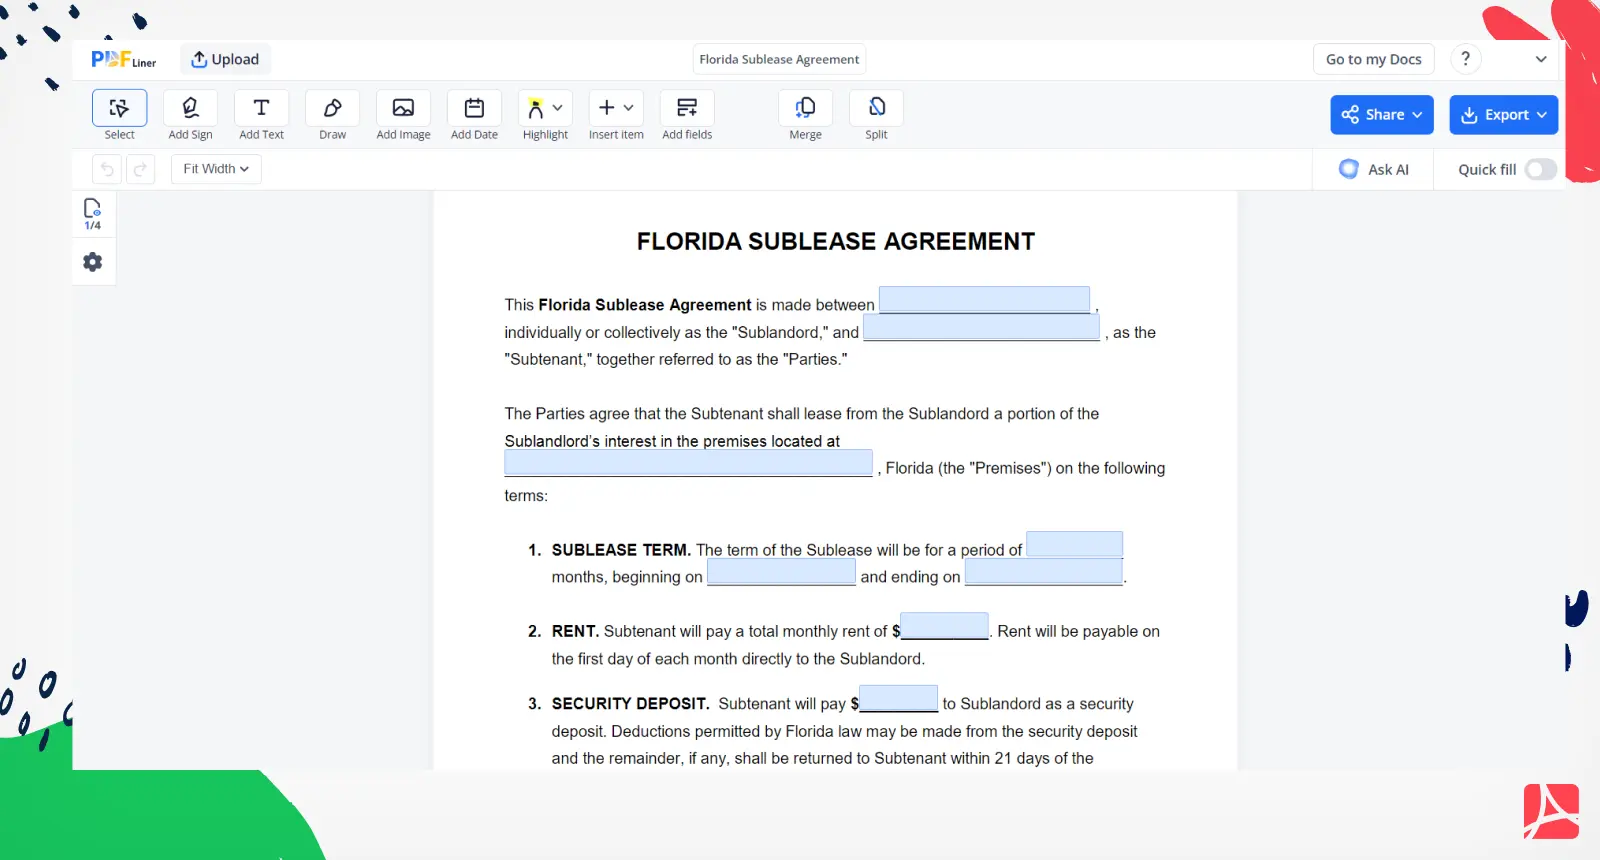 Florida Sublease Agreement Screenshot